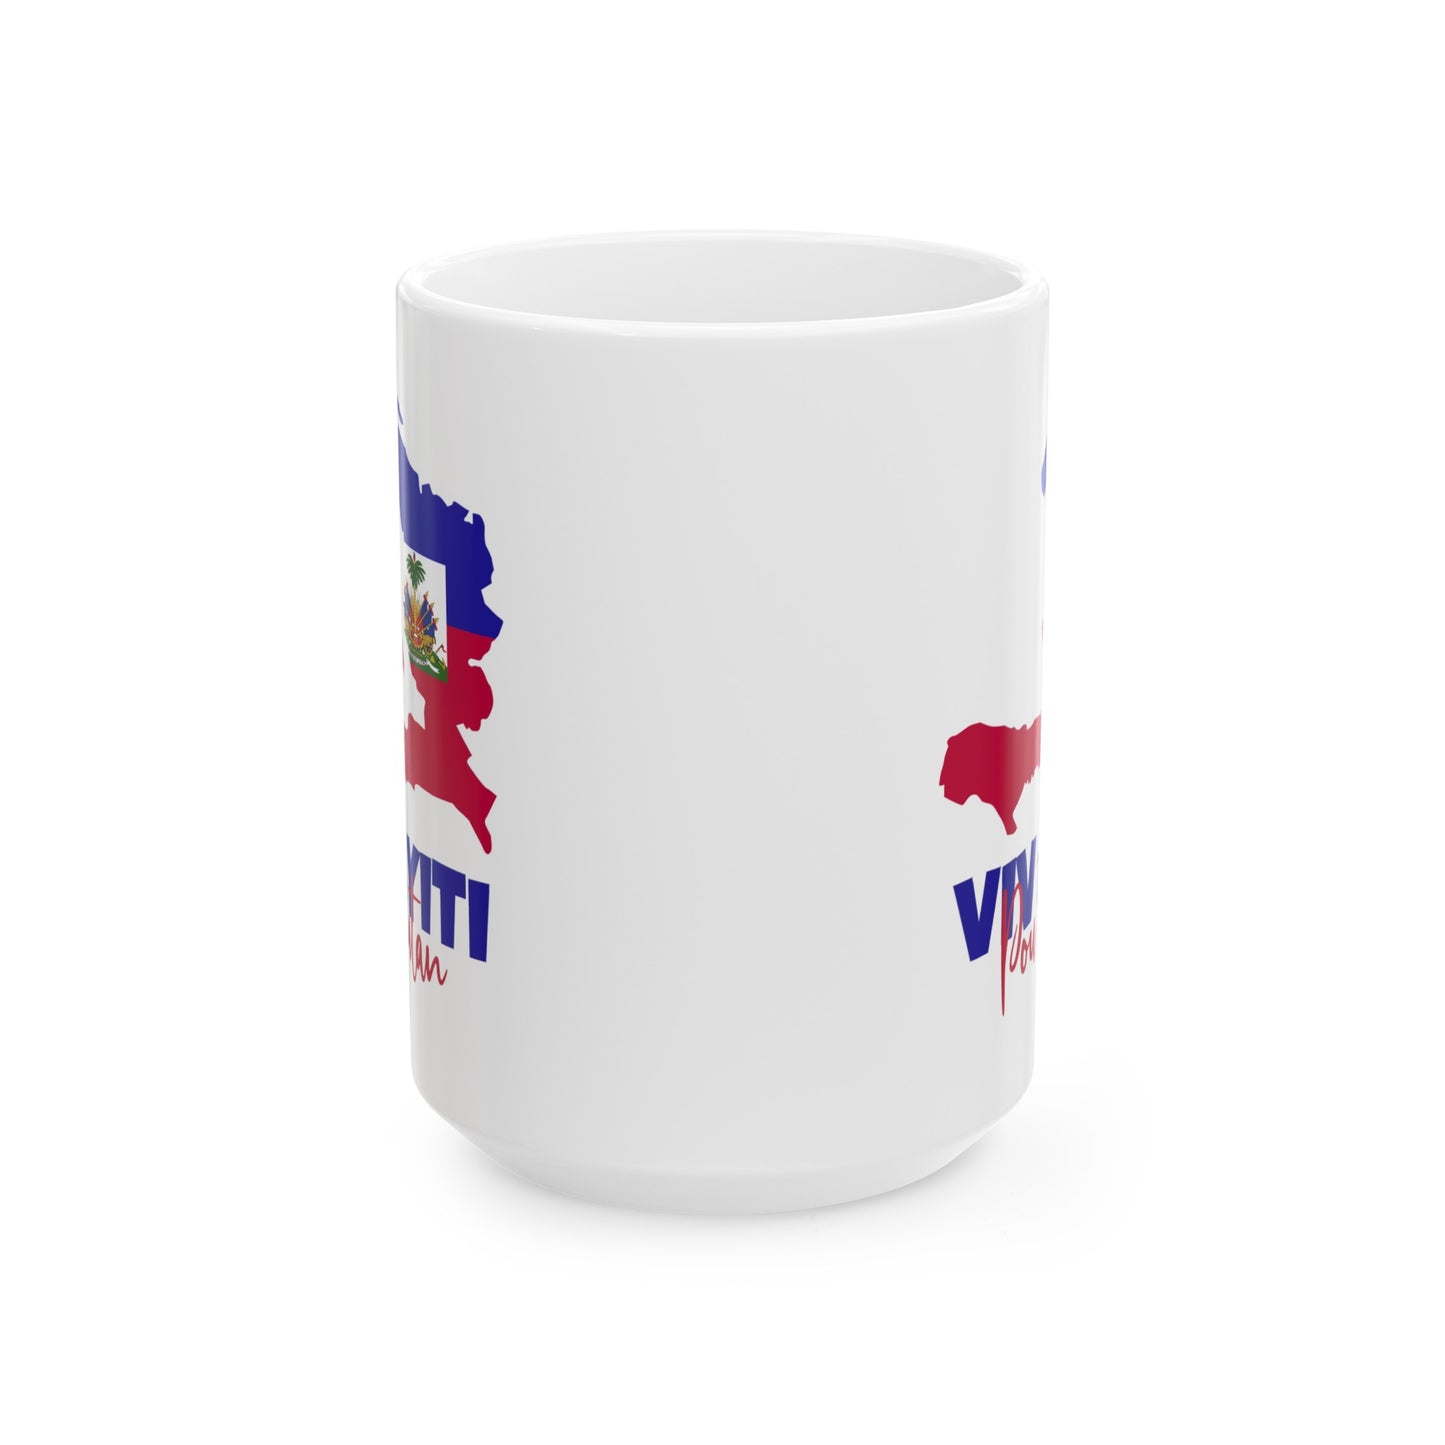 Viv Ayiti Pou Toutan Haitian Forever Haiti Ceramic Mug 11oz, 15oz Cup